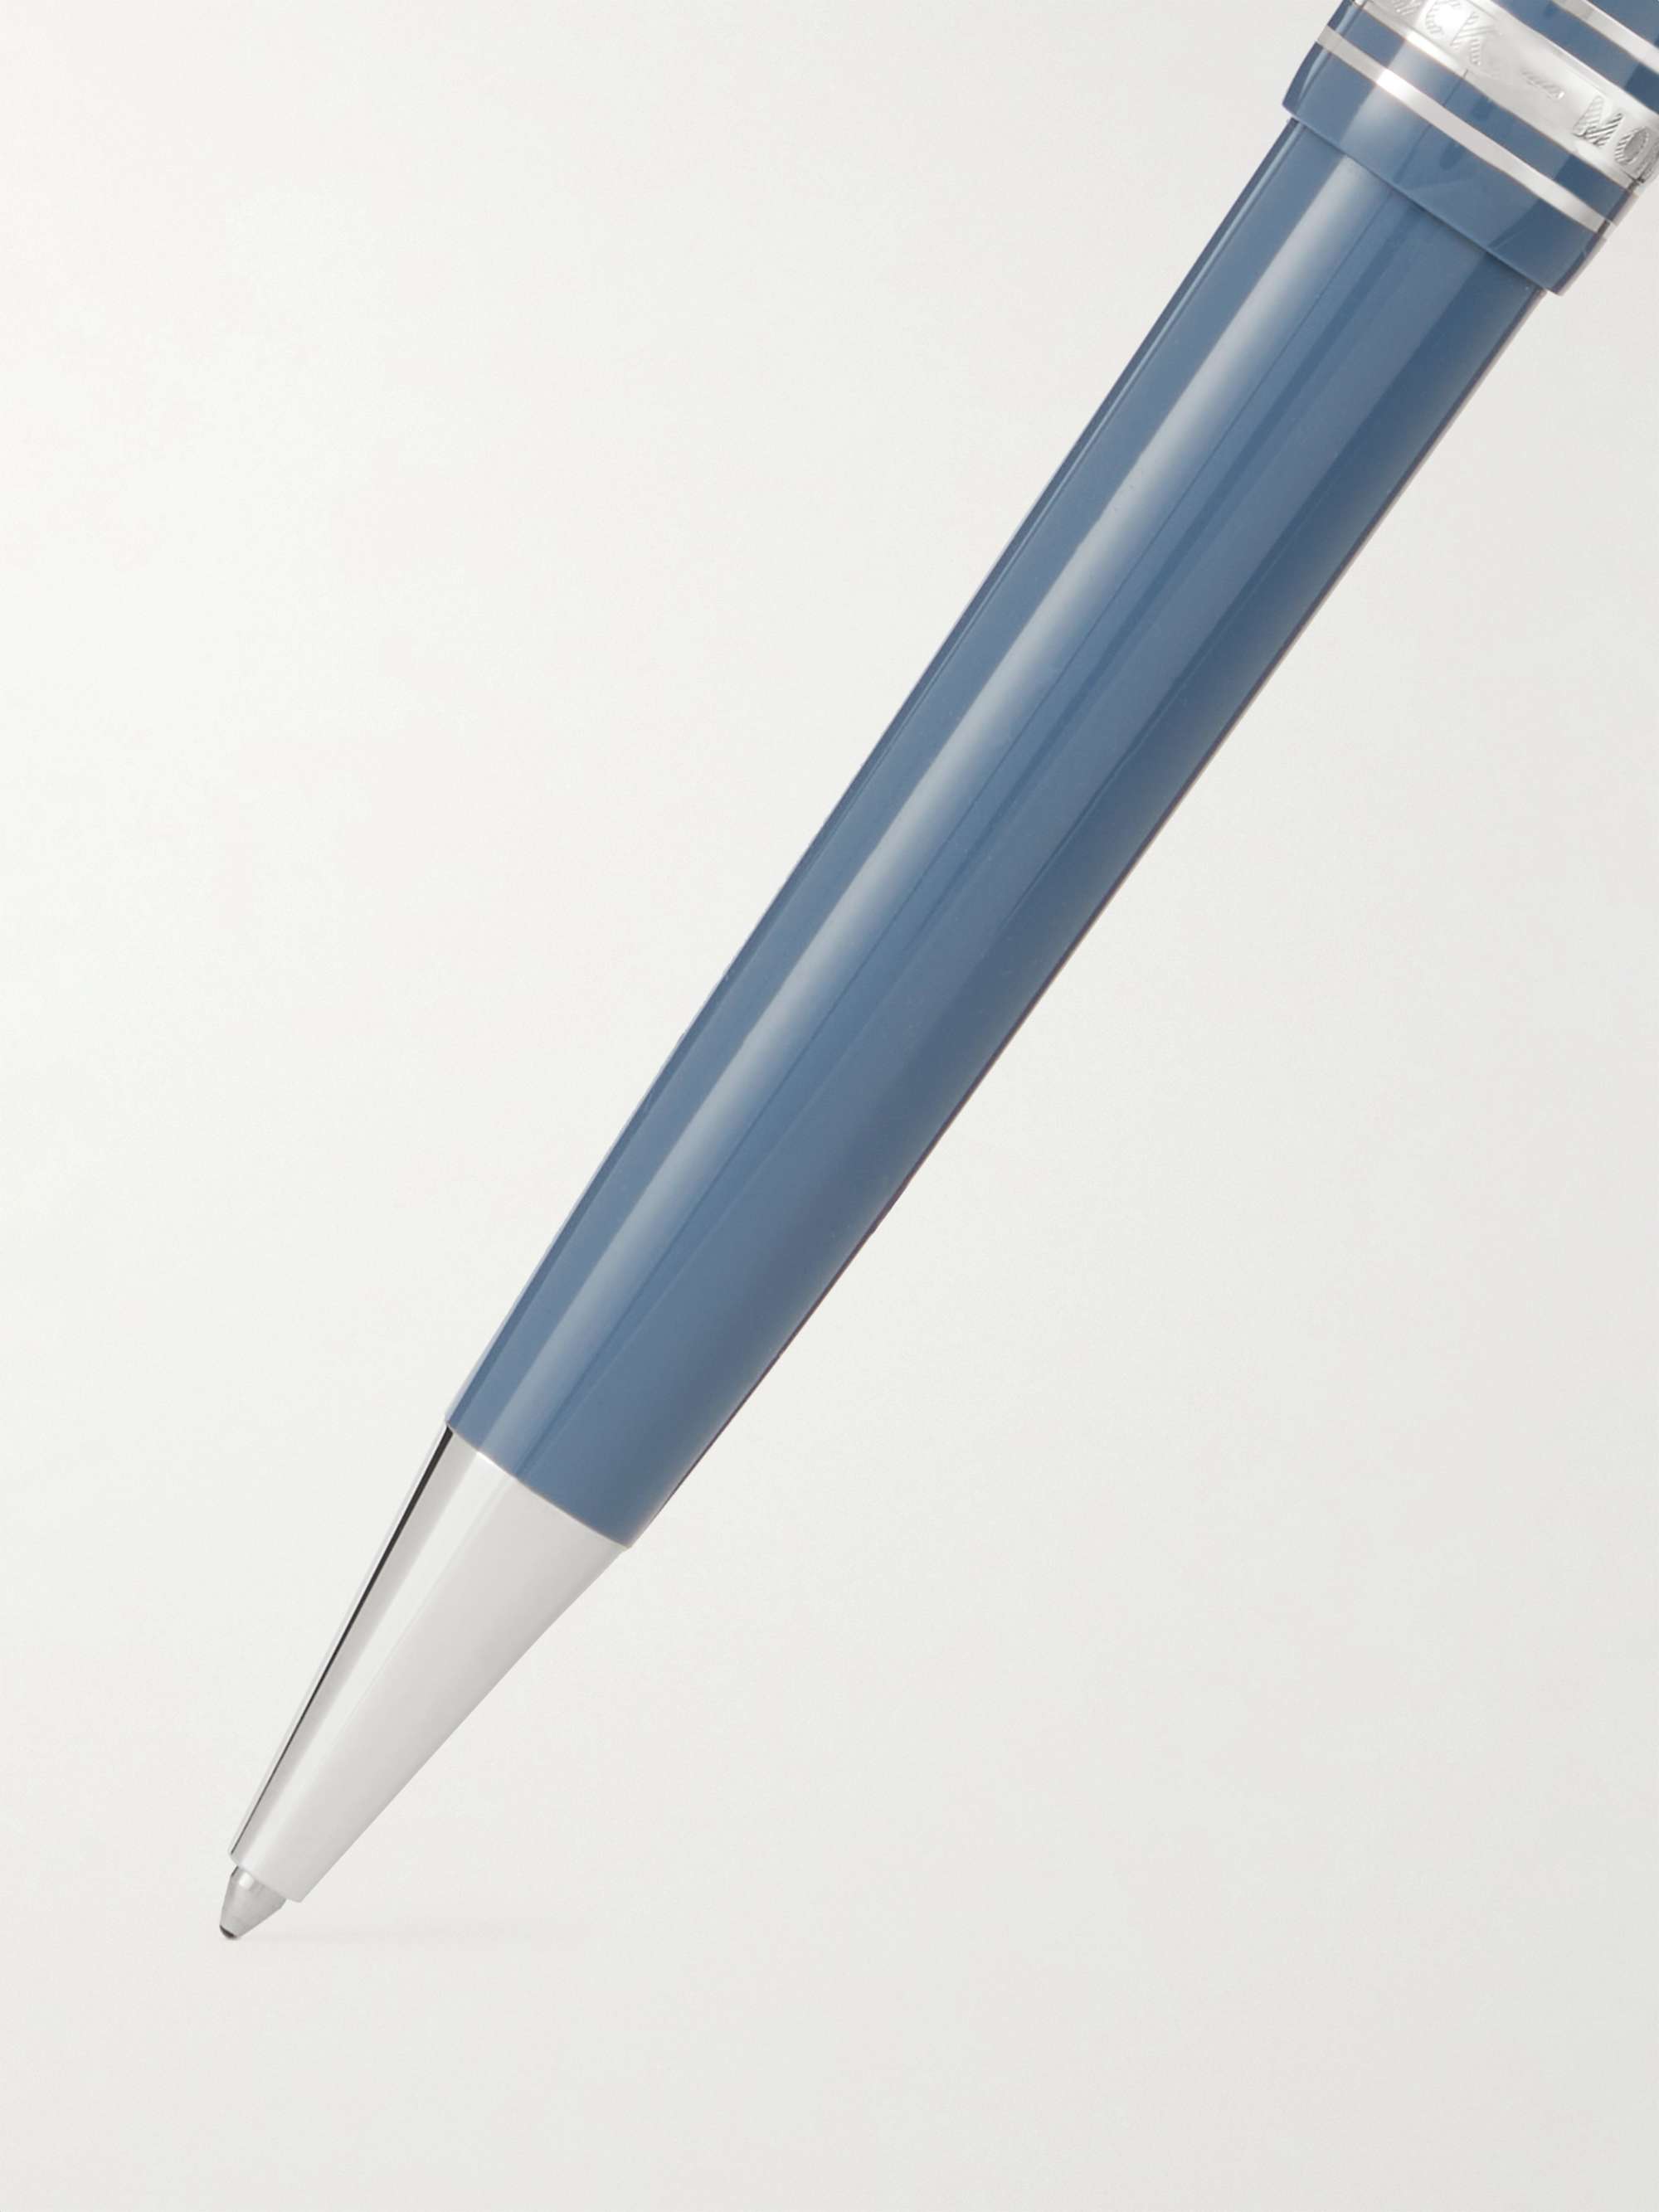 MONTBLANC Meisterstück Glacier Midsize Resin and Platinum-Plated Ballpoint Pen